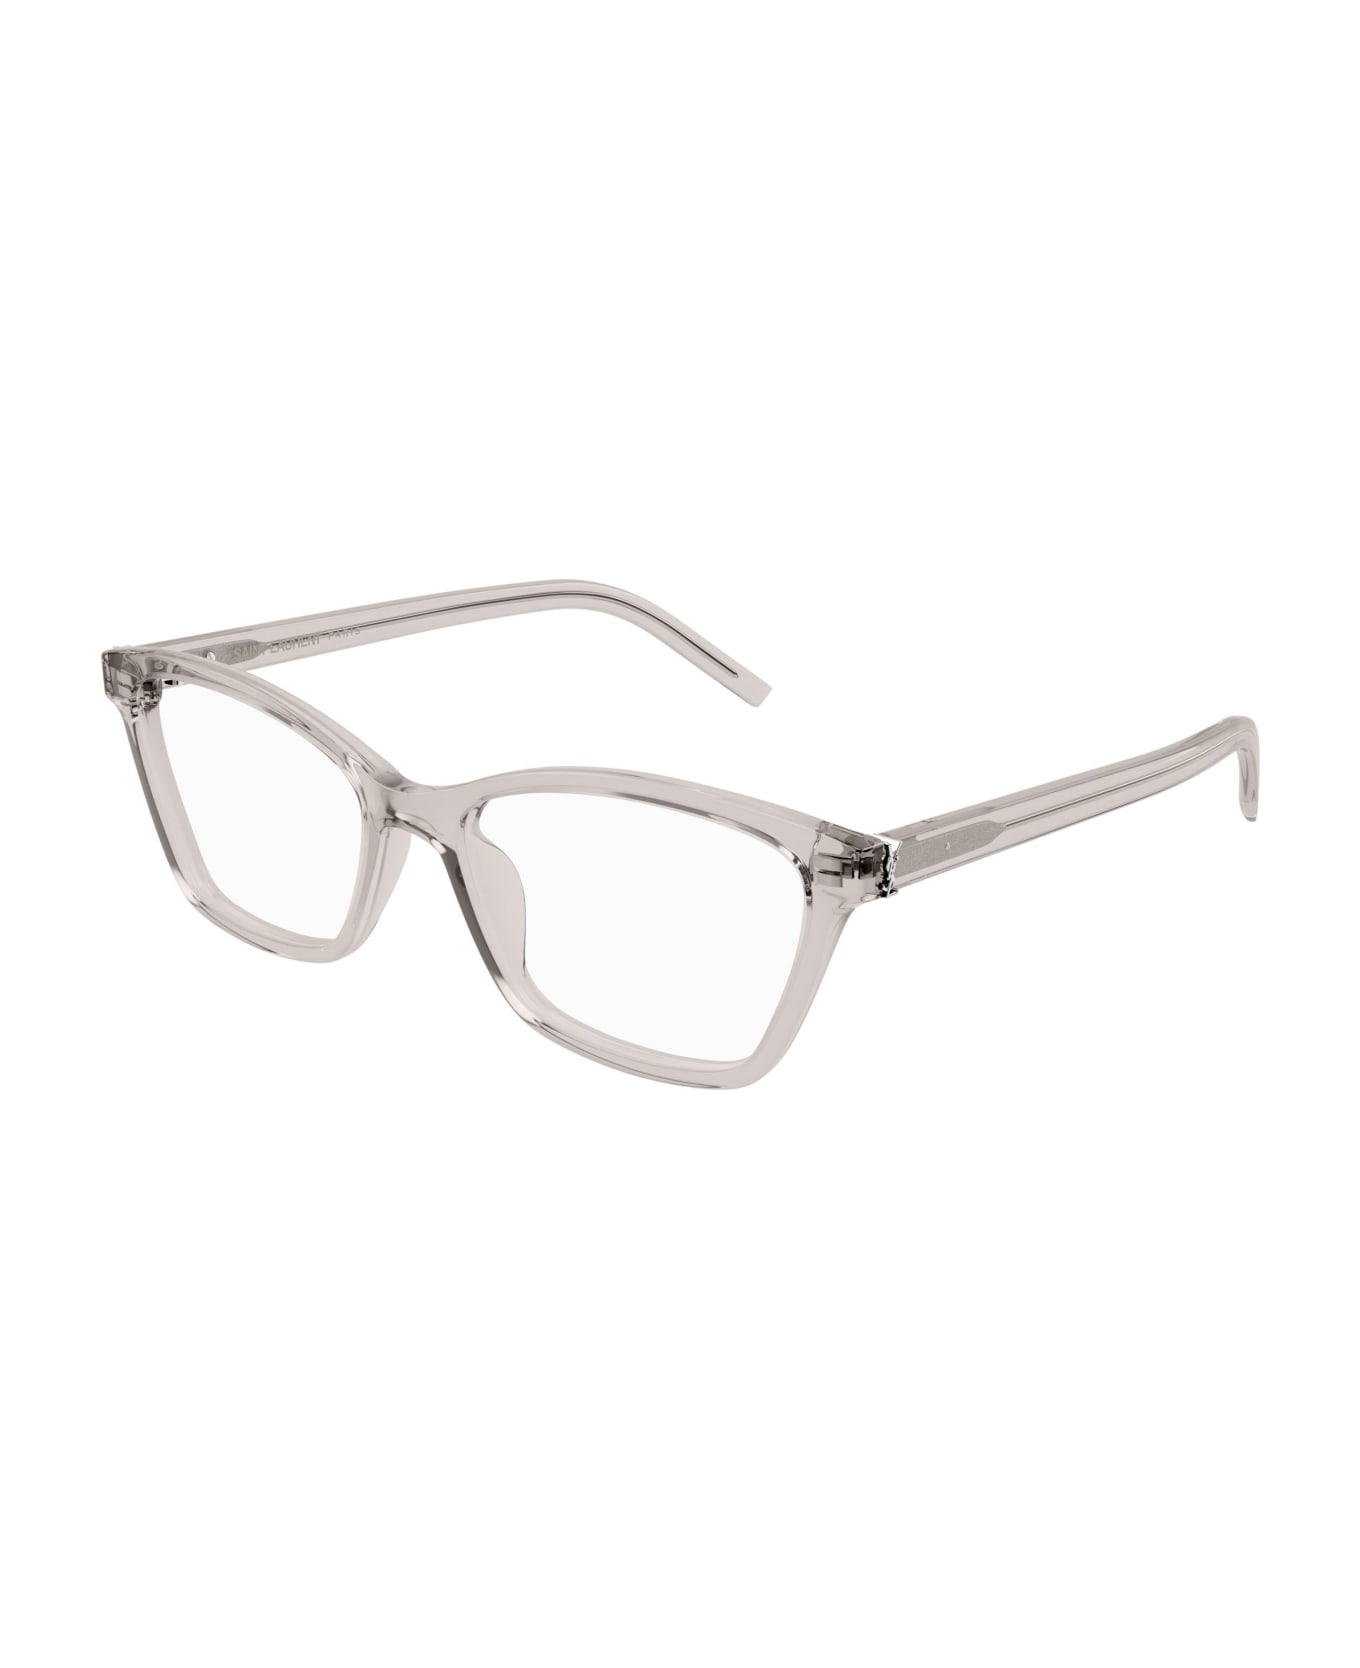 Saint Laurent Eyewear Glasses - Beige アイウェア